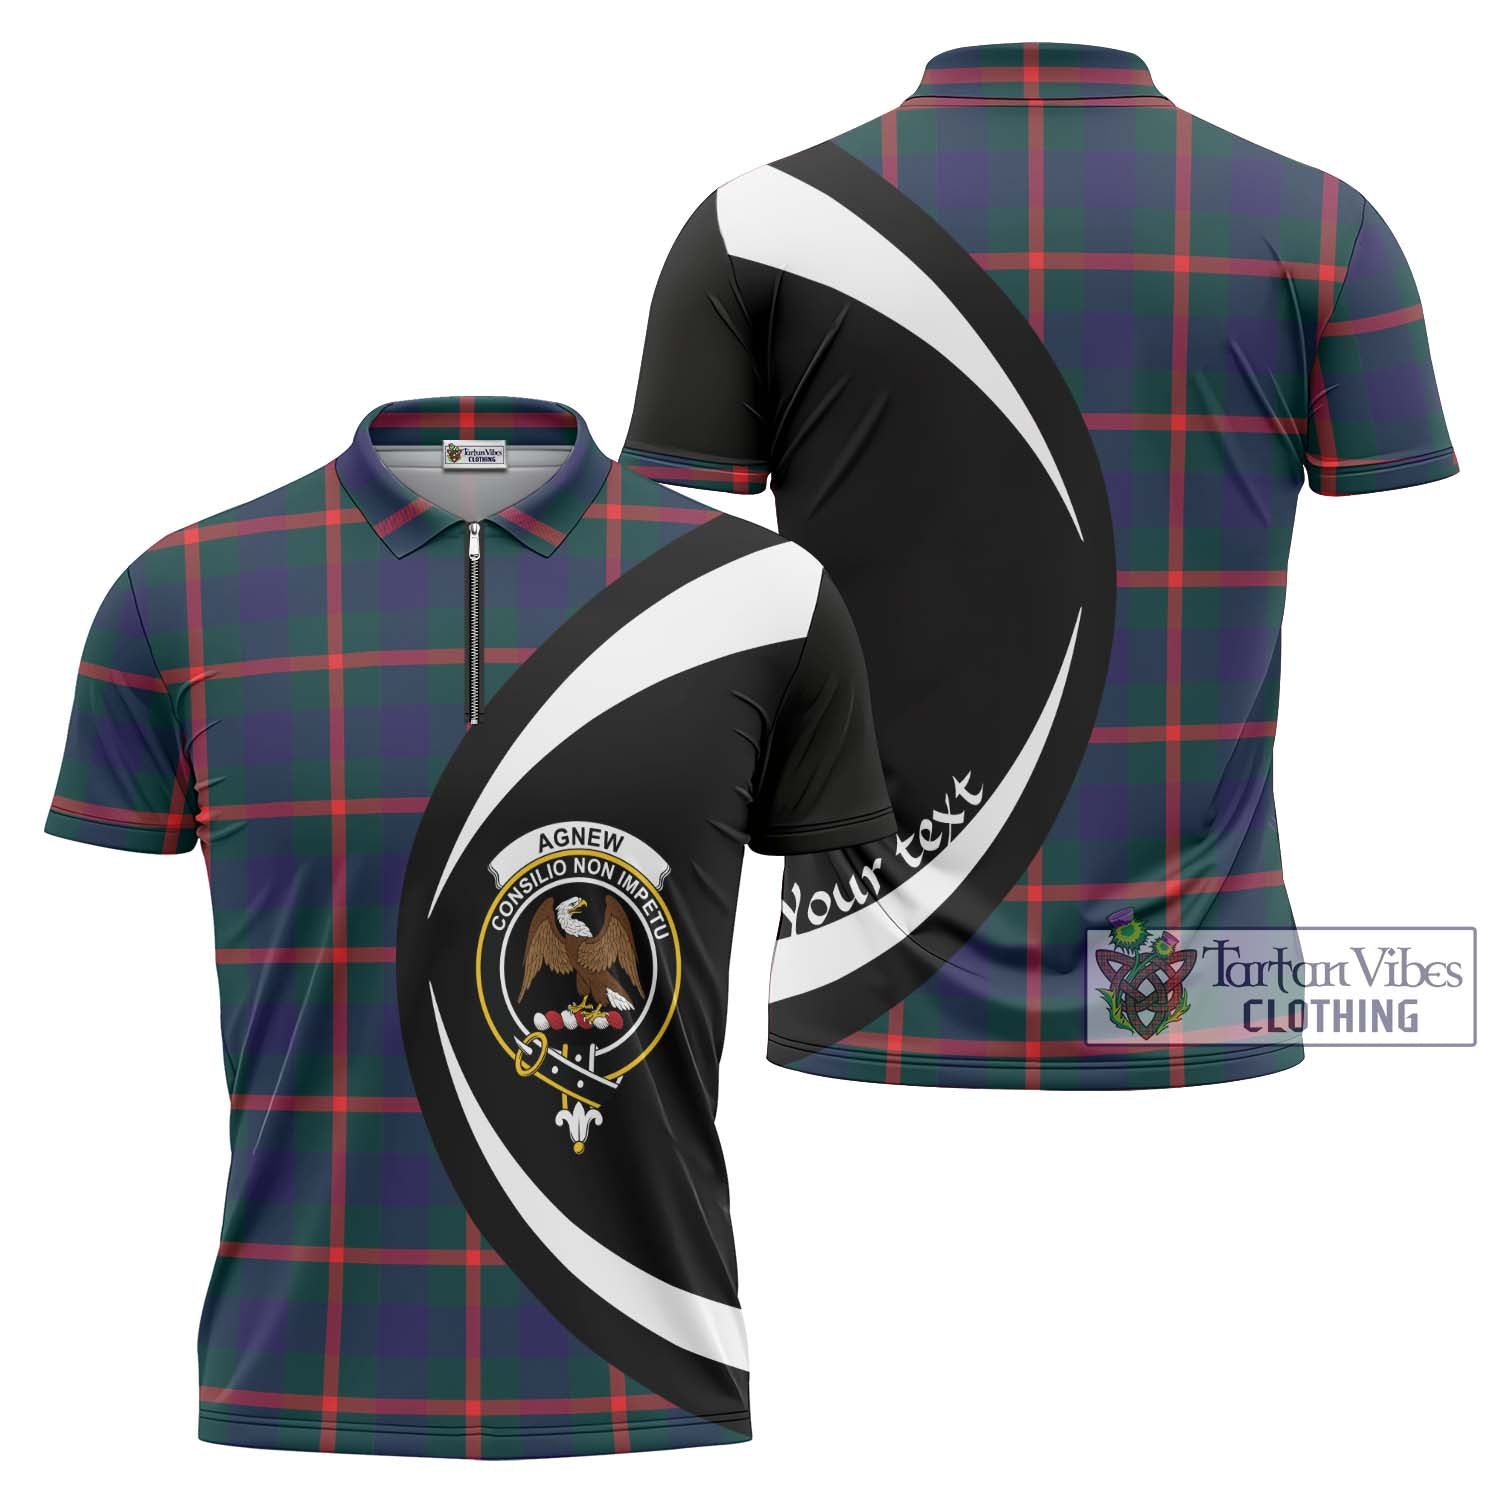 Tartan Vibes Clothing Agnew Modern Tartan Zipper Polo Shirt with Family Crest Circle Style